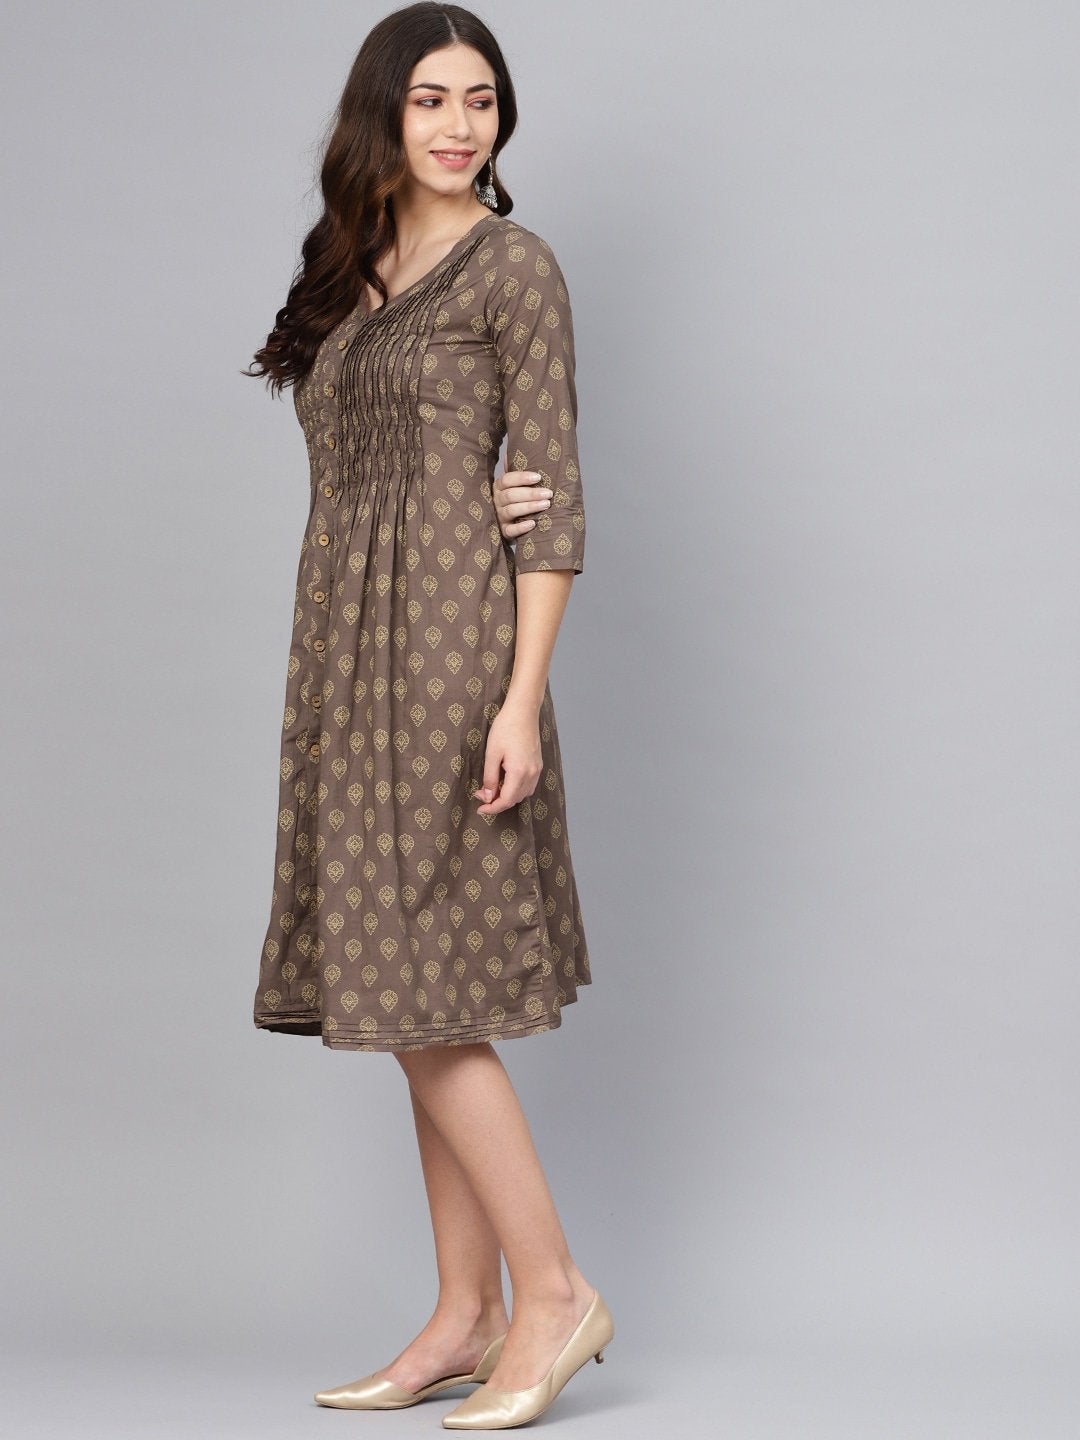 Women's Printed Brown & Beige A-Line Dress - Meeranshi